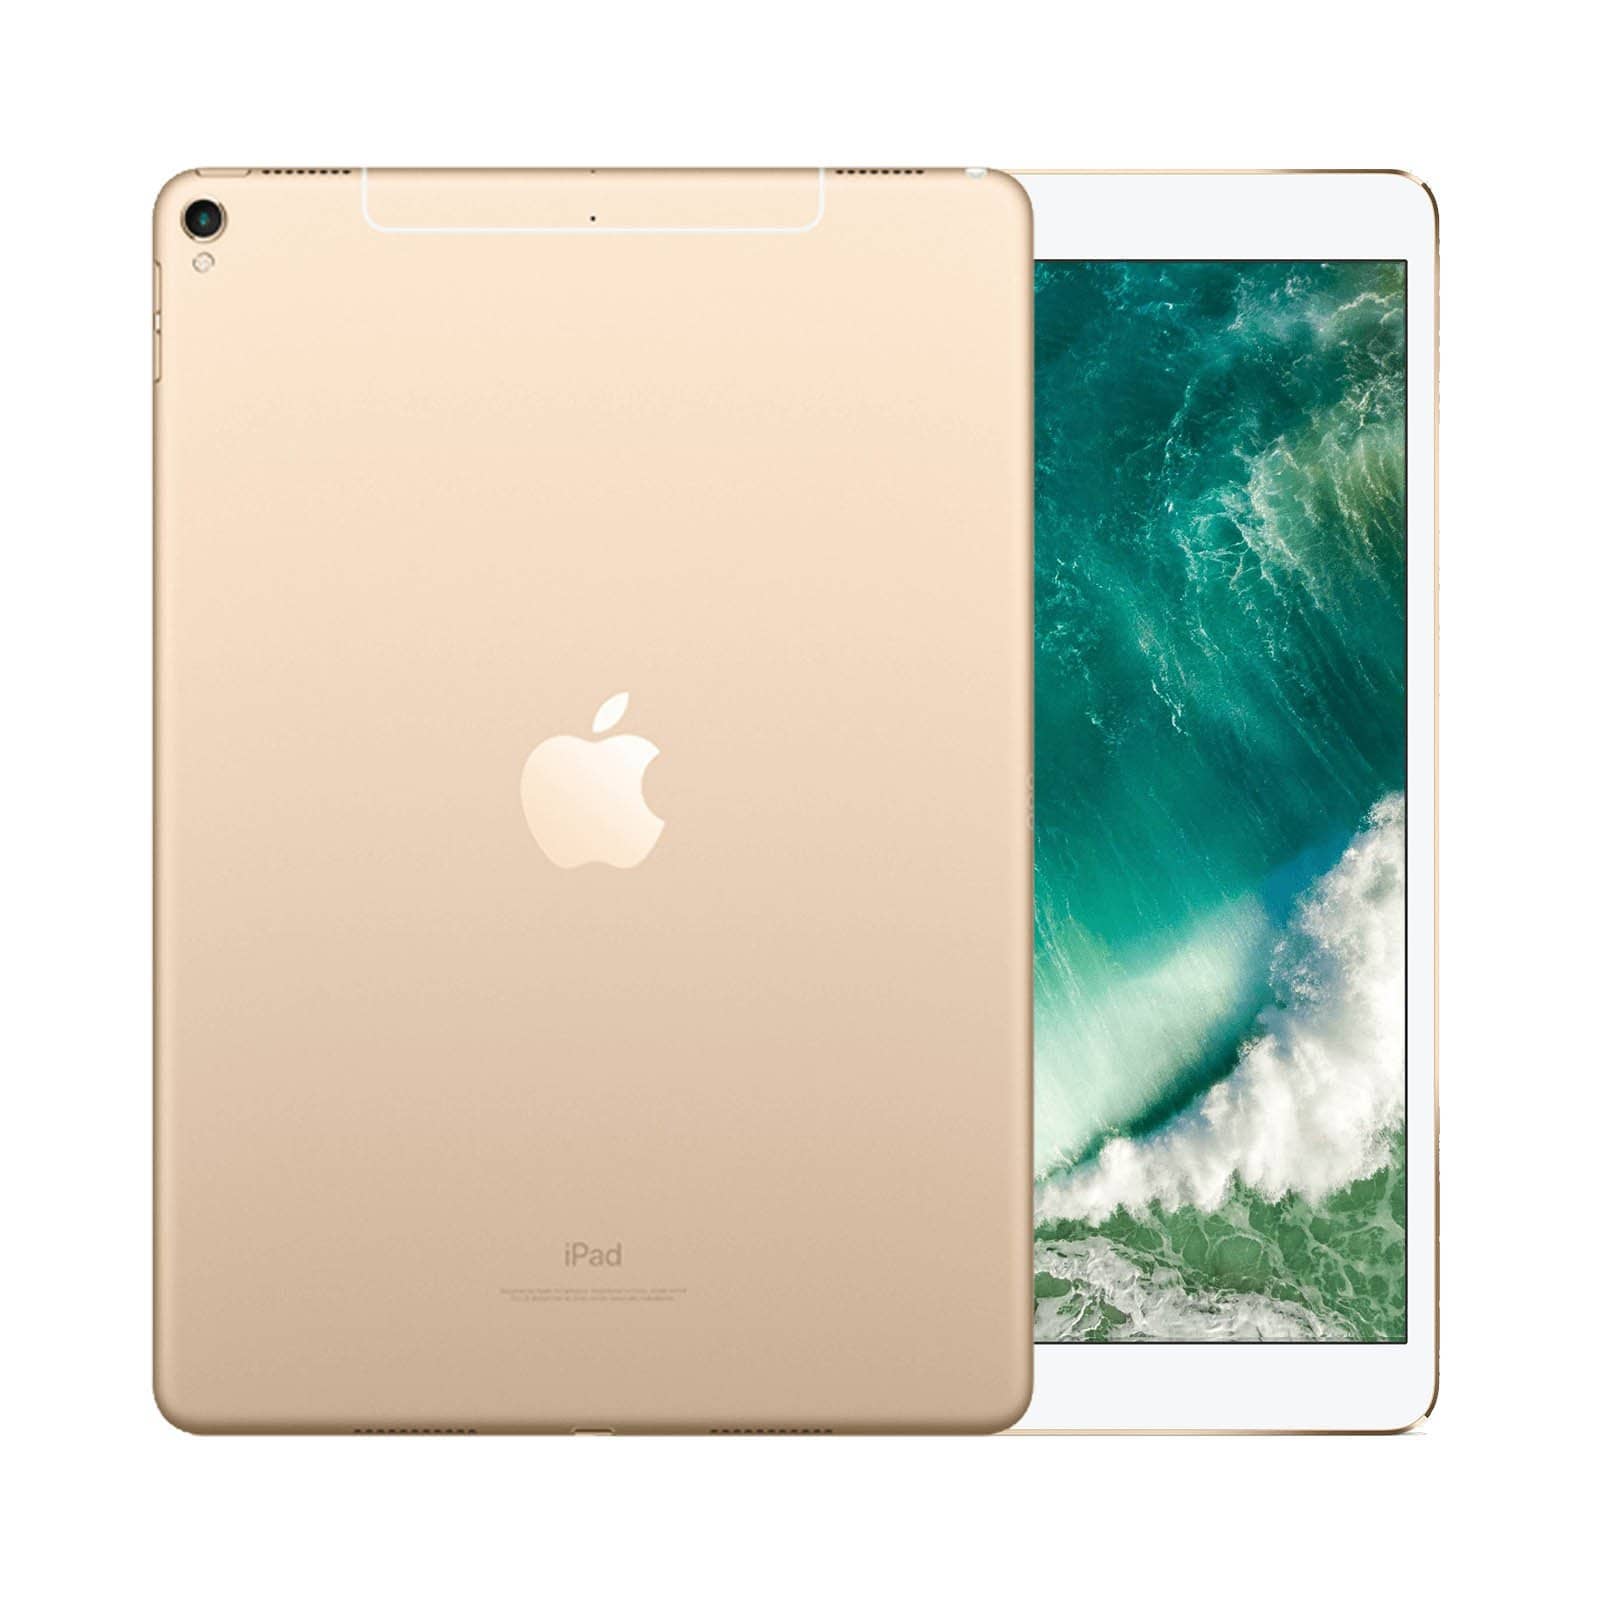 iPad Pro 10.5 Inch 512GB Gold Very Good - Unlocked 512GB Gold Very Good